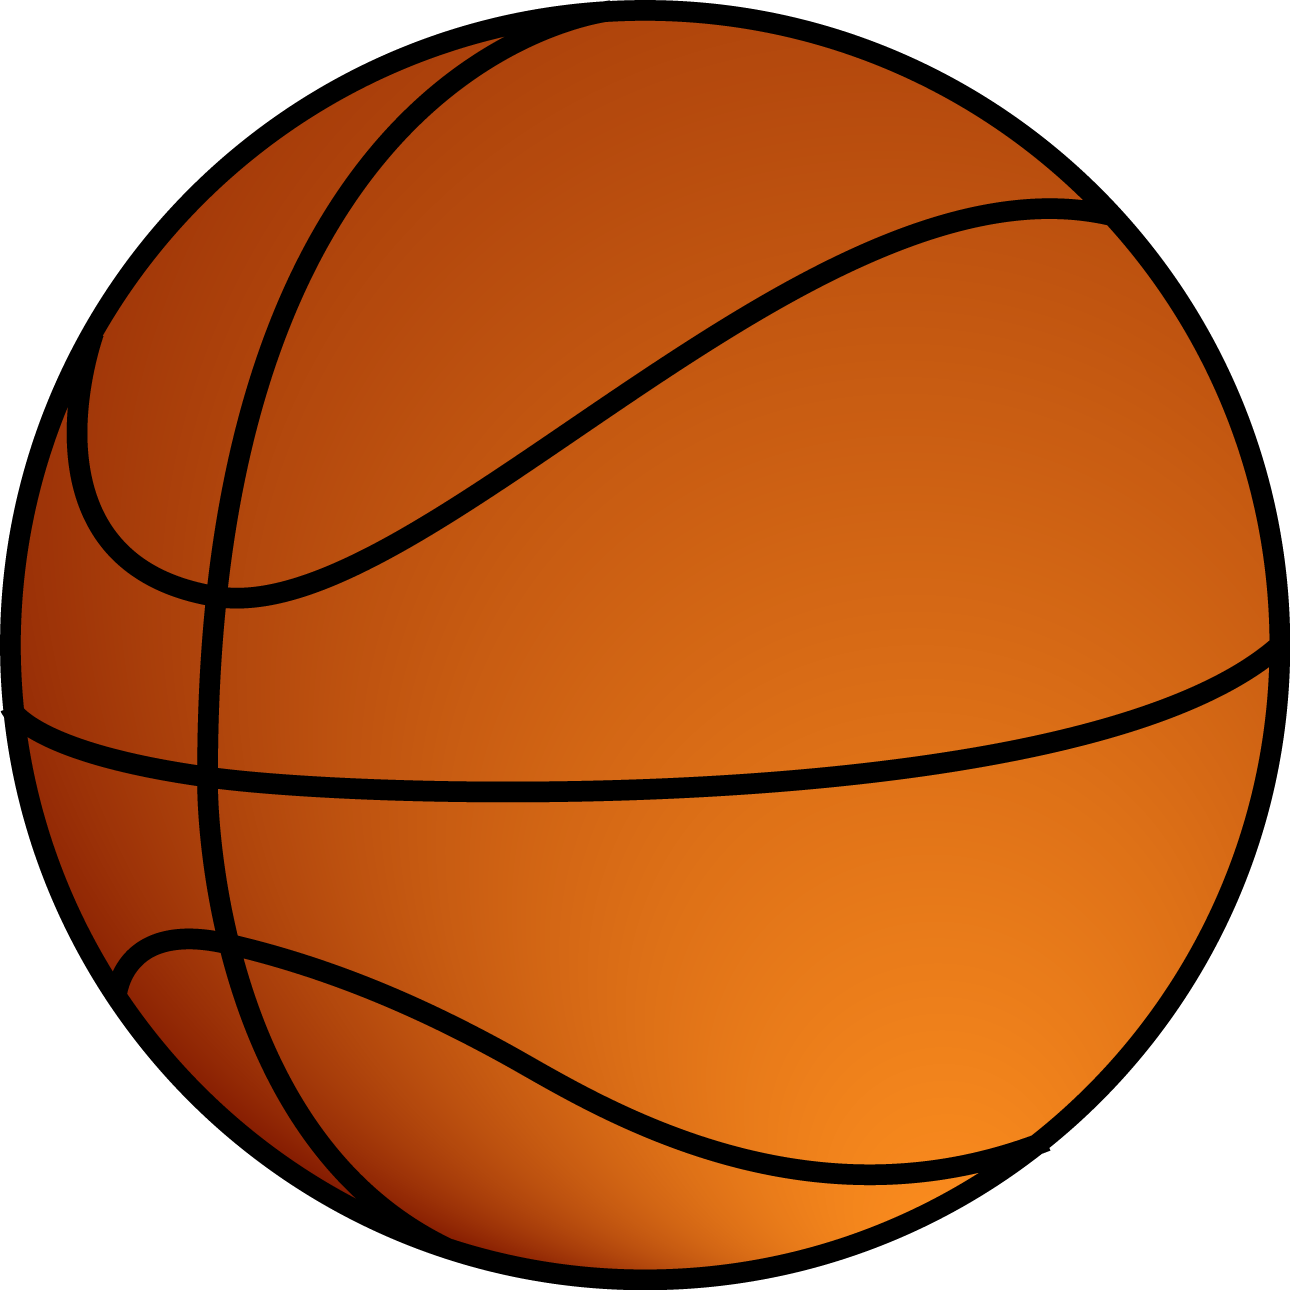 Basketball Ball Png Image - Basketball, Transparent background PNG HD thumbnail